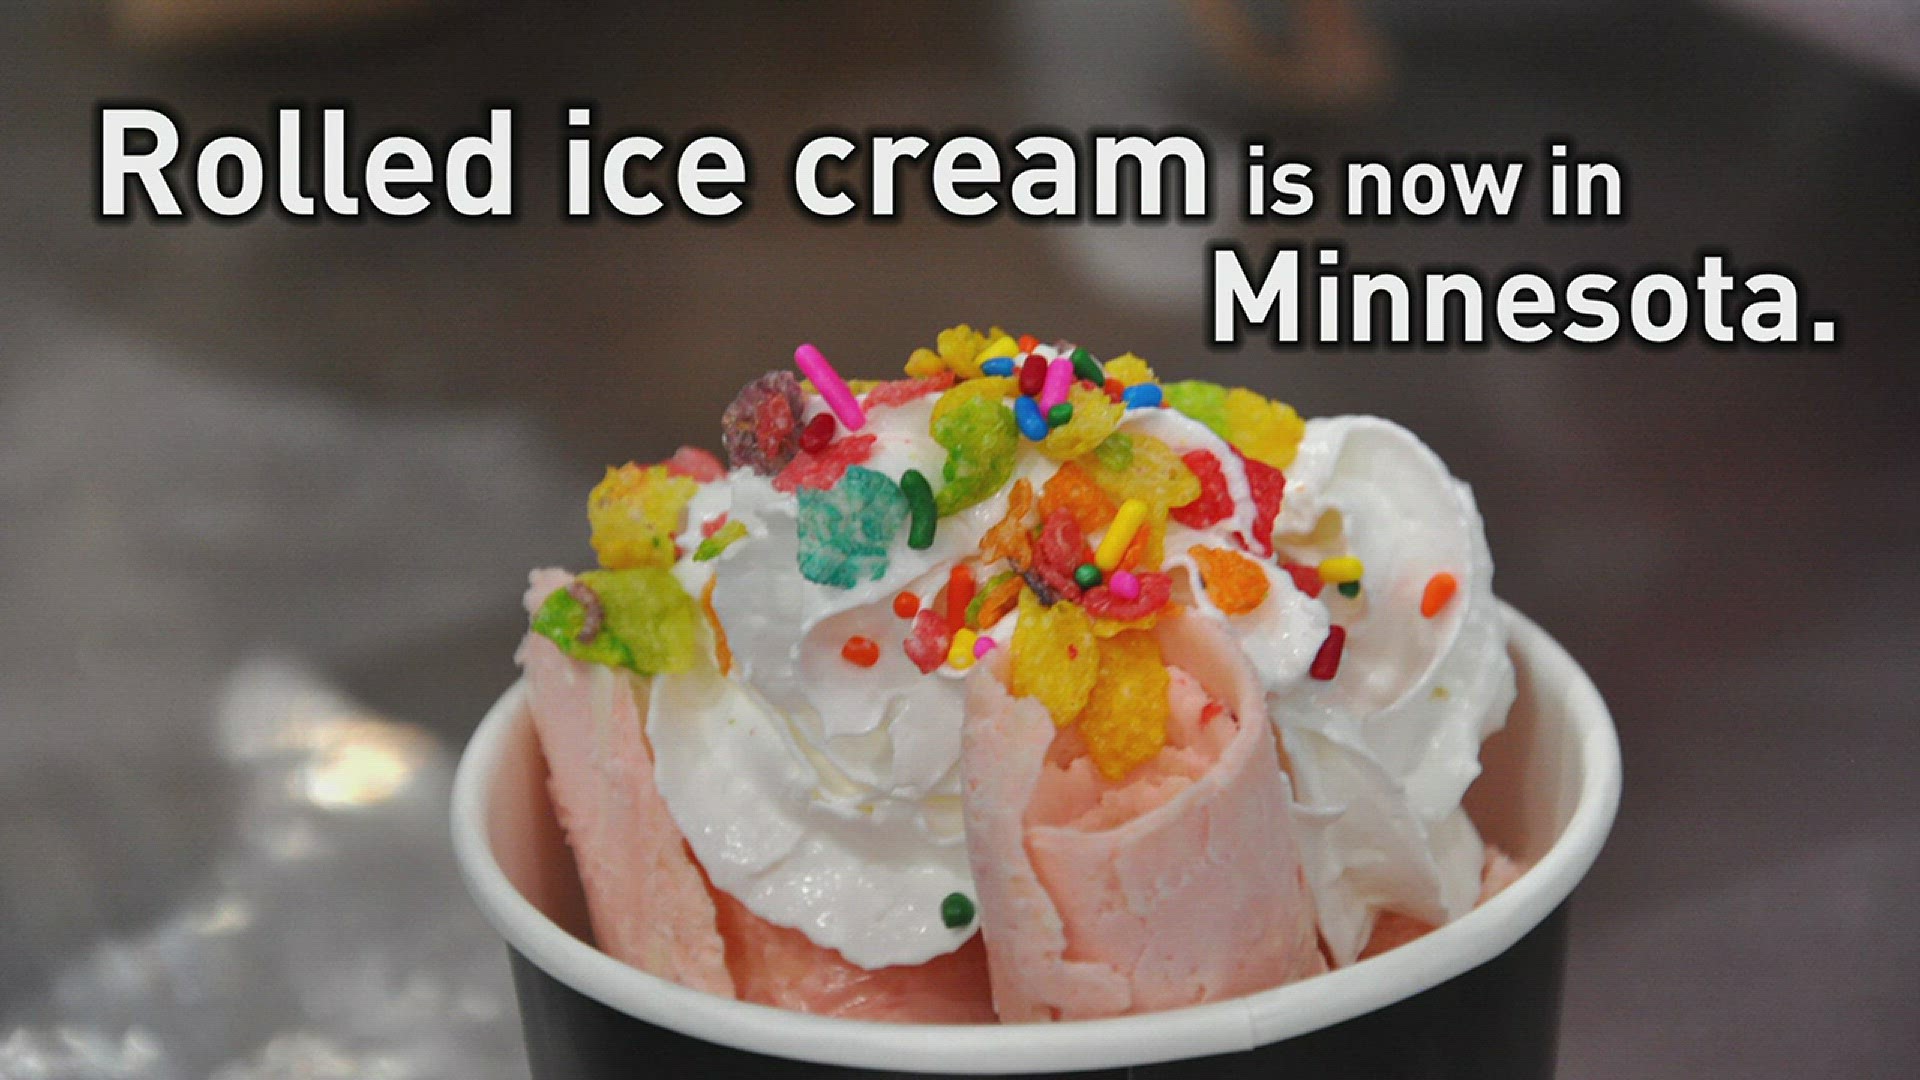 Rolled ice cream craze hits Minnesota